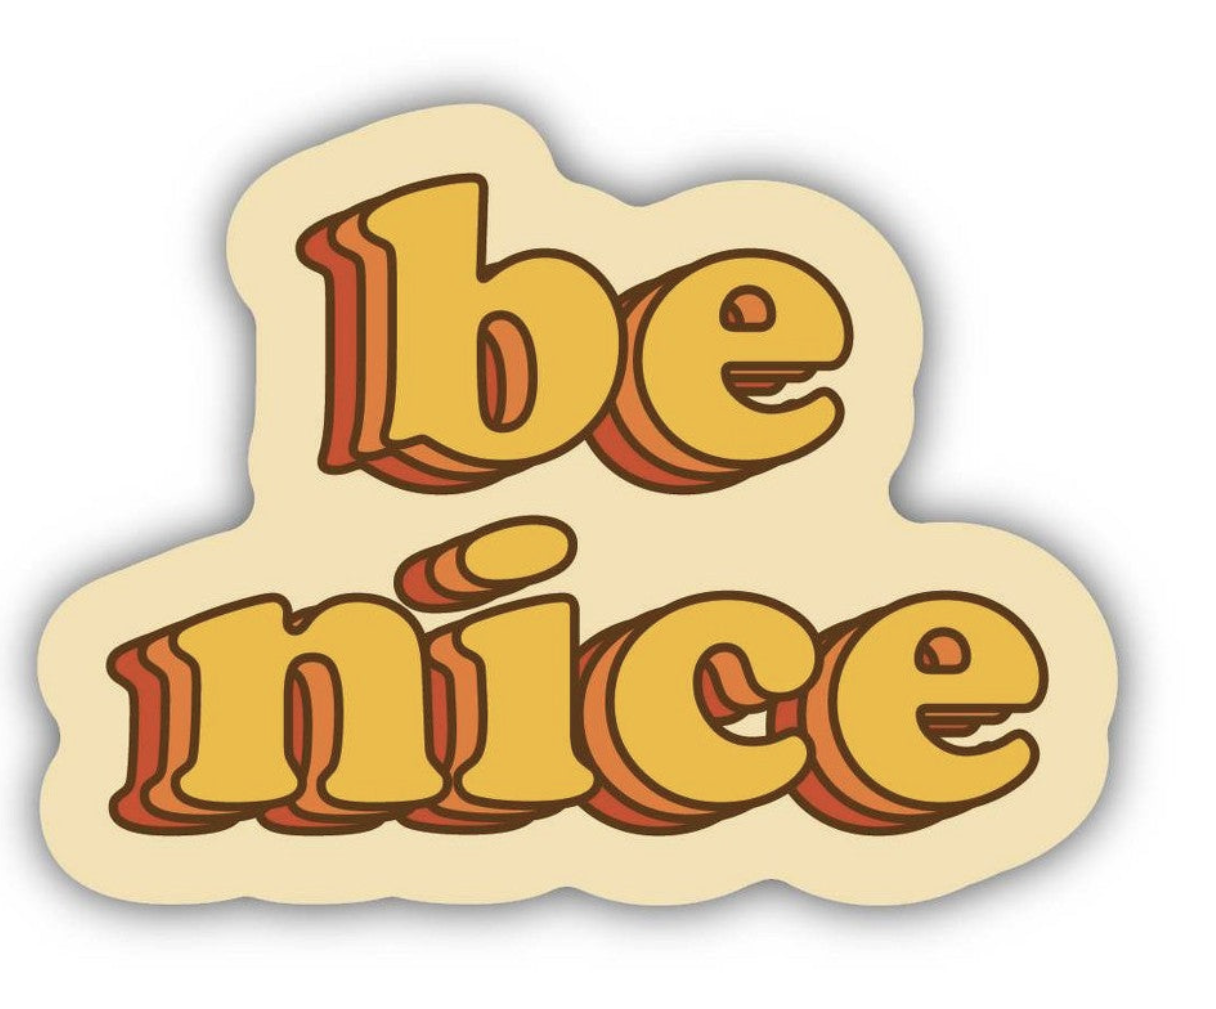 Be Nice Sticker